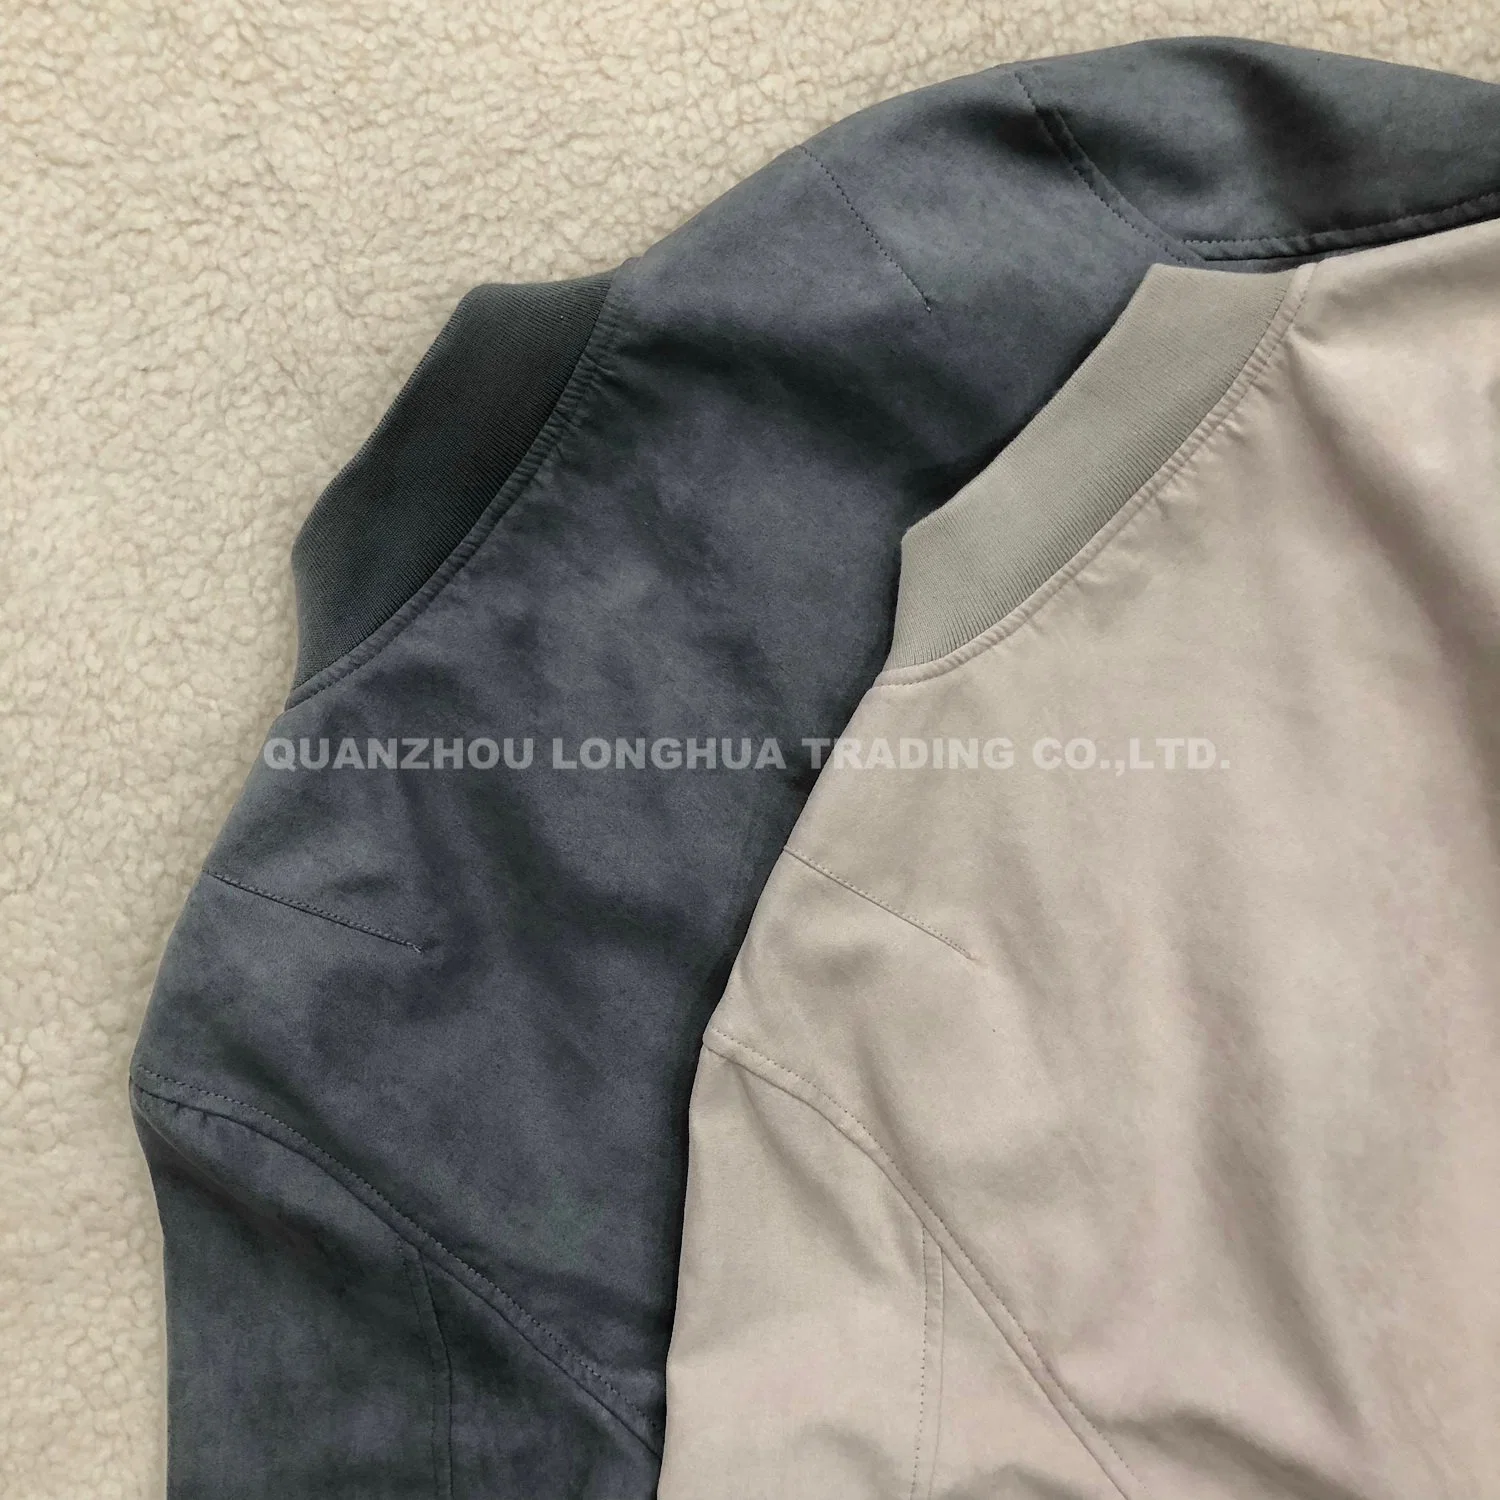 Men Jacket Boy Jacket Woven Fashion Suede Apparel Grey Beige Clothing Outdoor Clothes